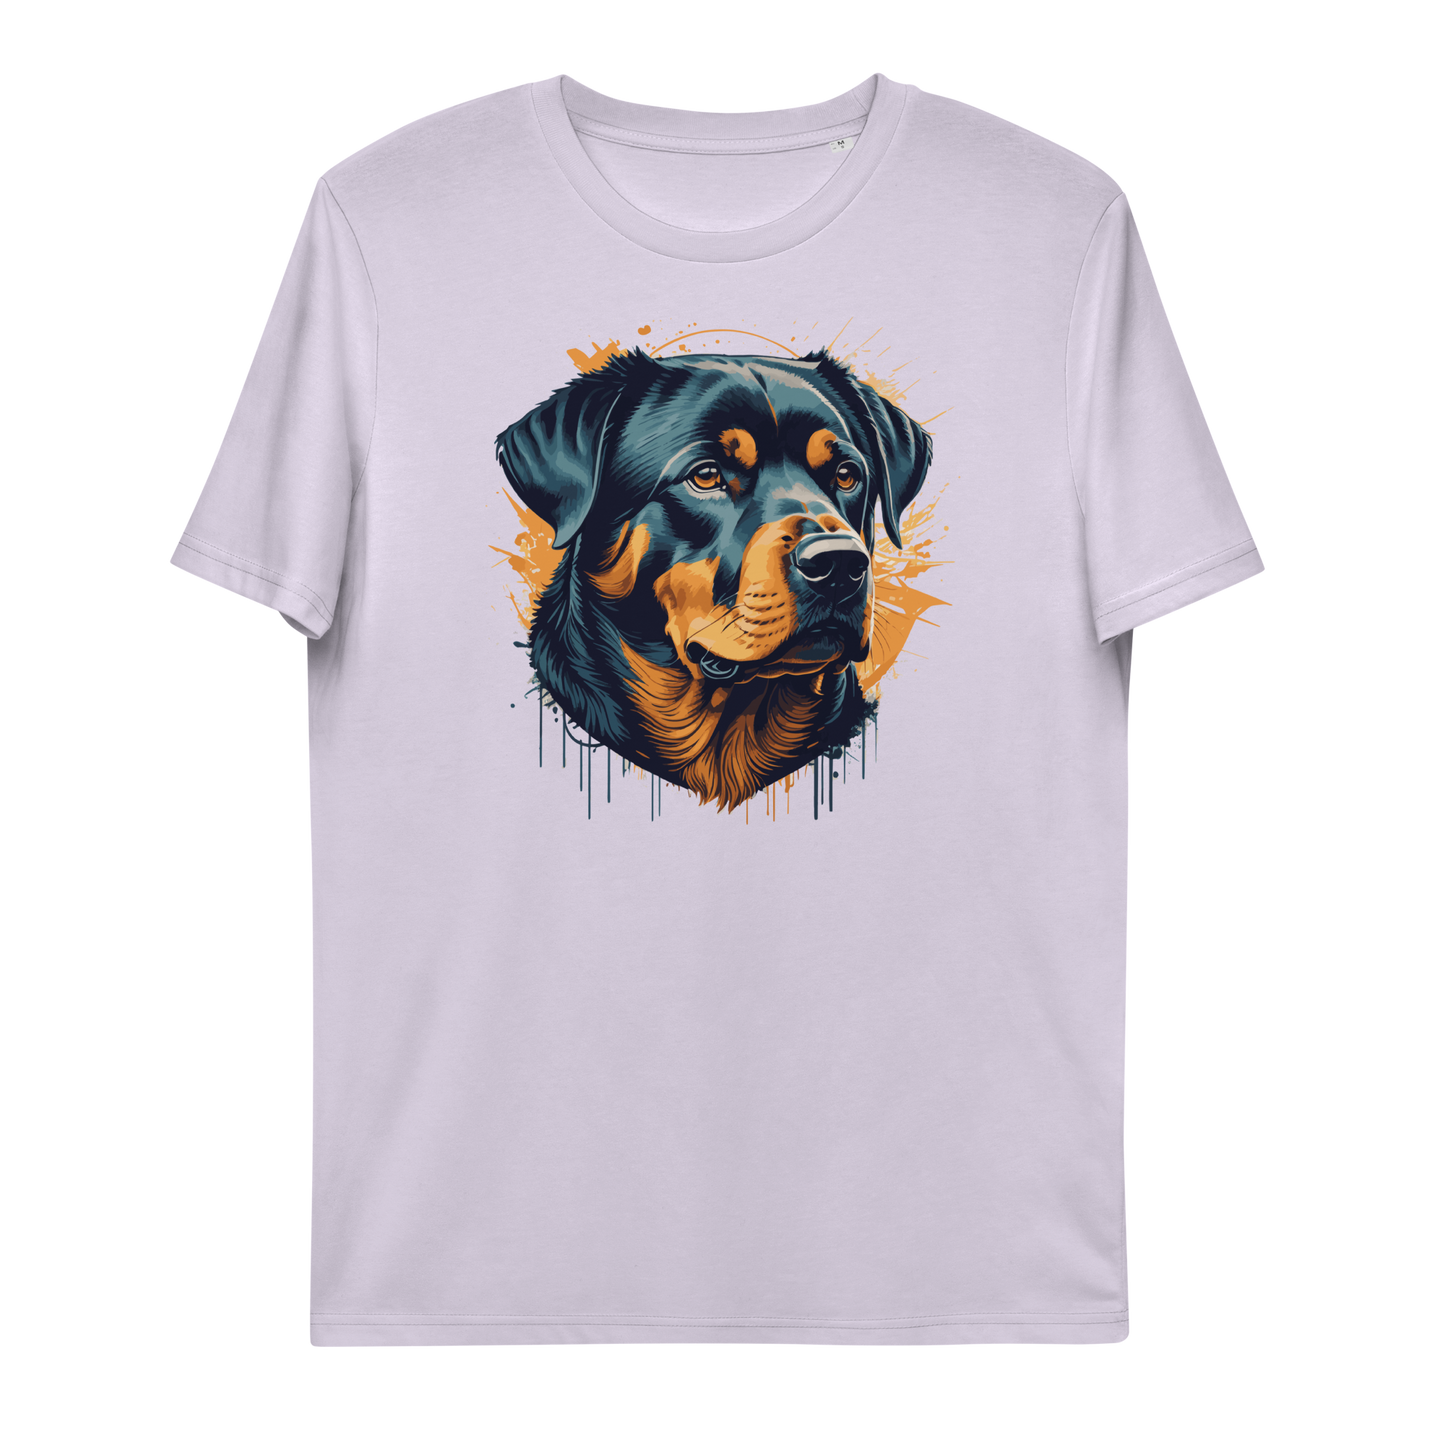 Unisex-Bio-Baumwoll-T-Shirt (Rottweiler)